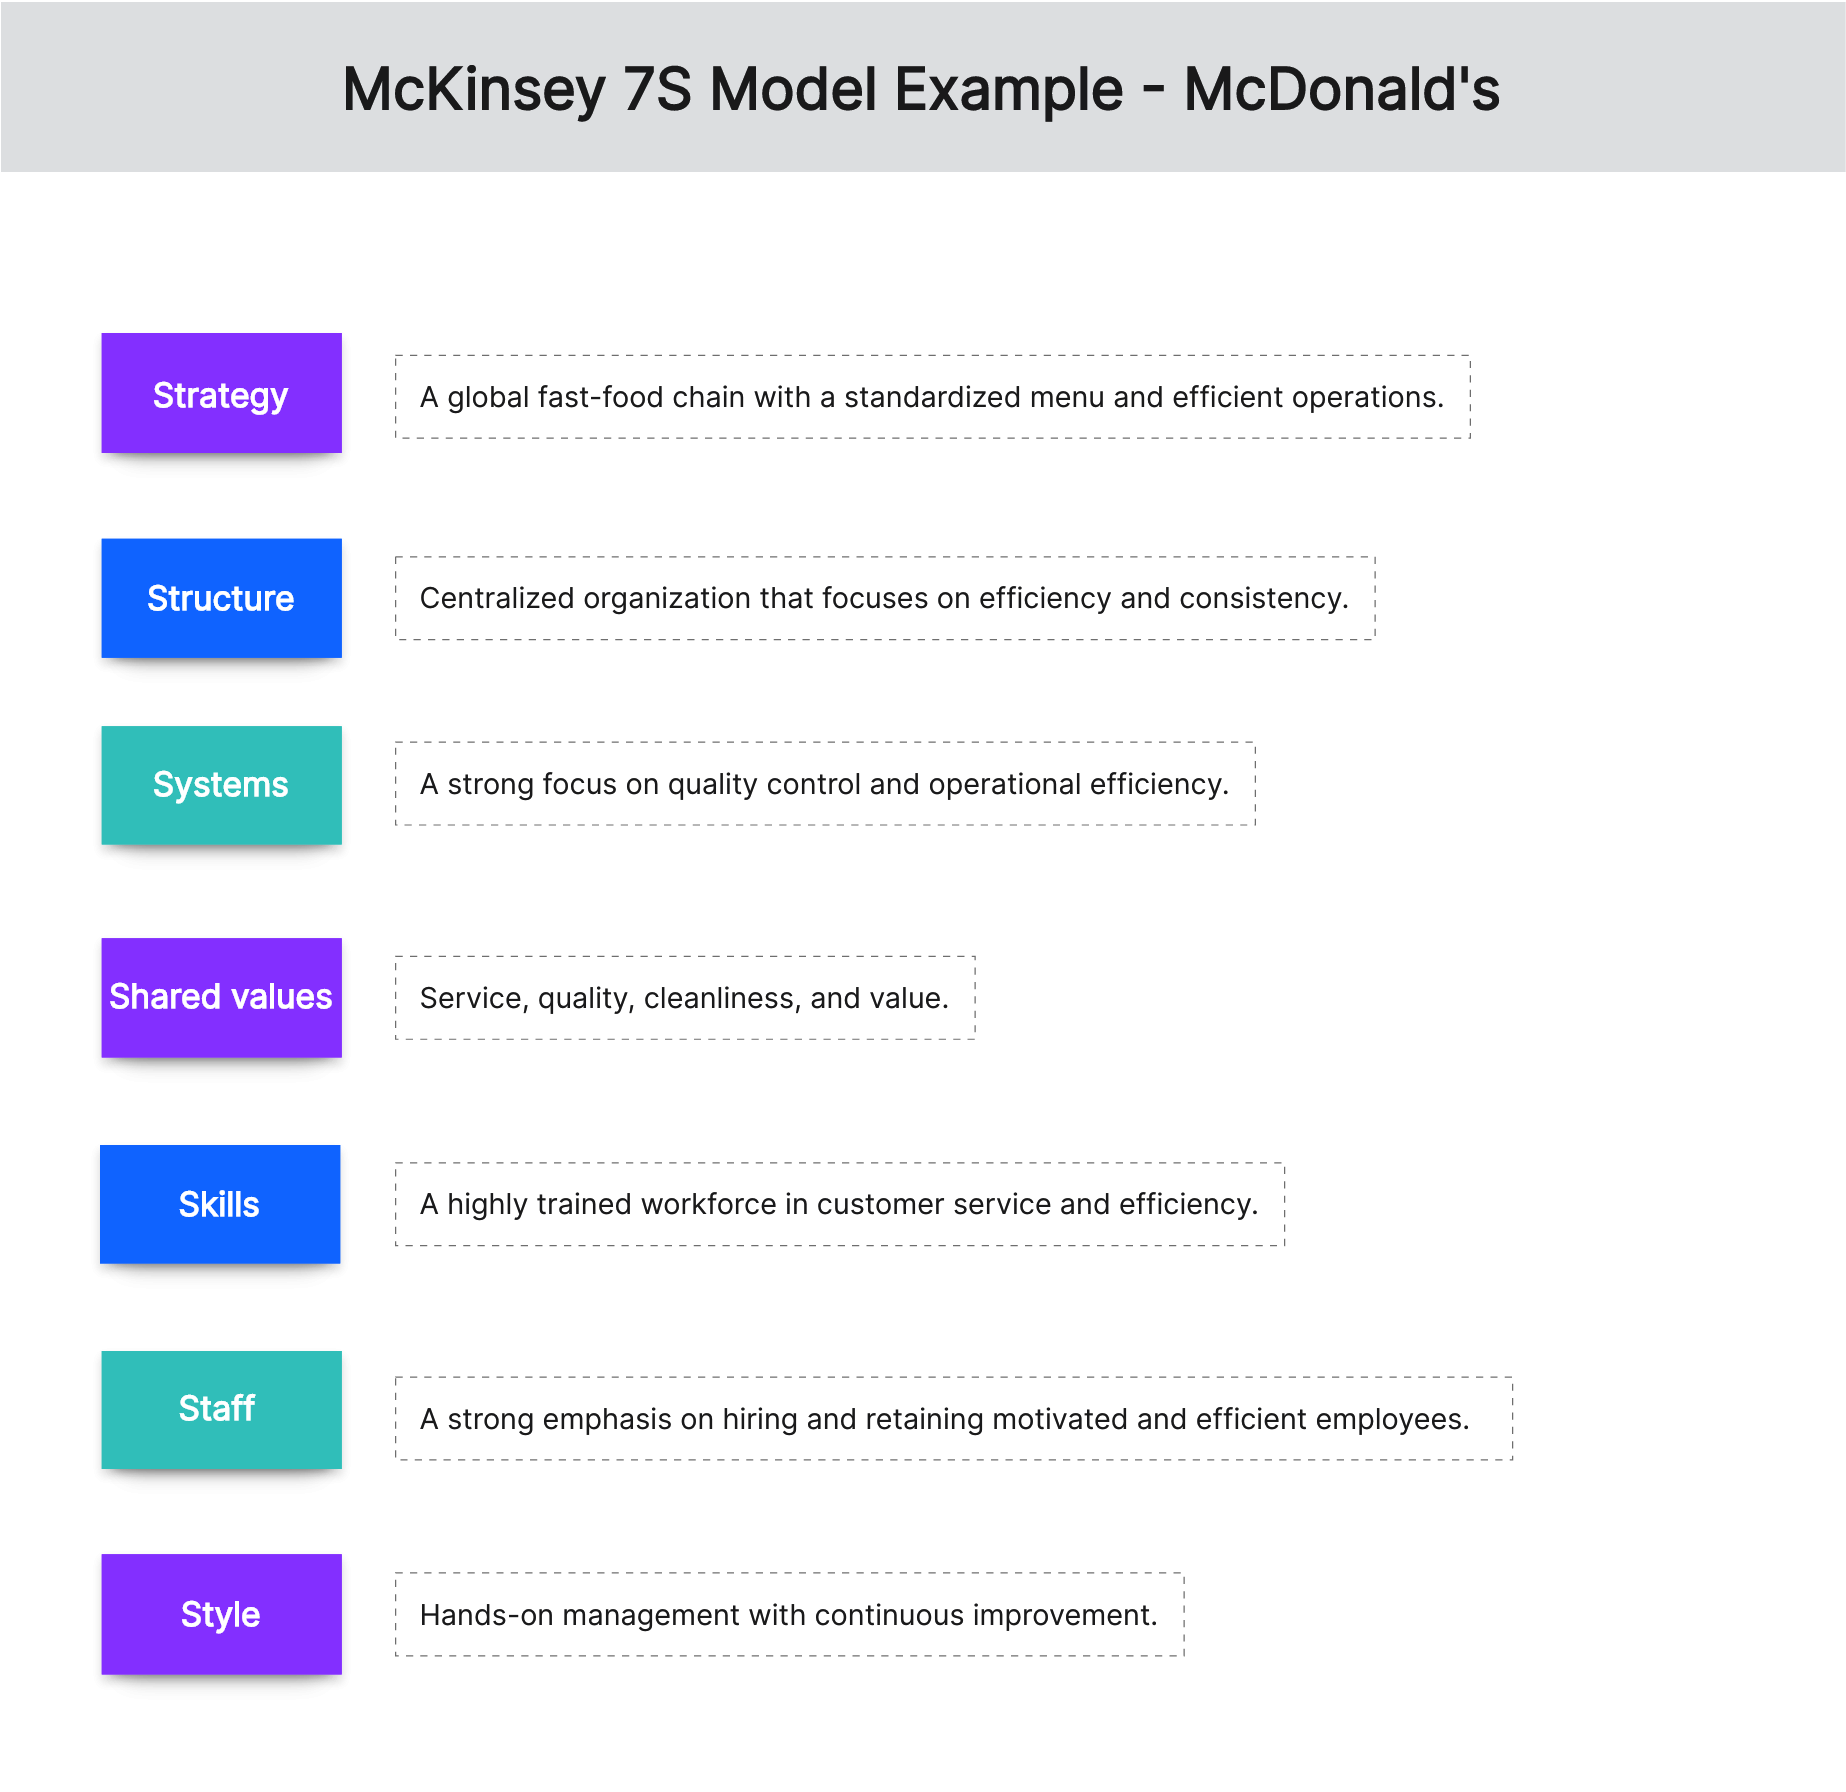 mckinsey-7s-model-example-mcdonalds